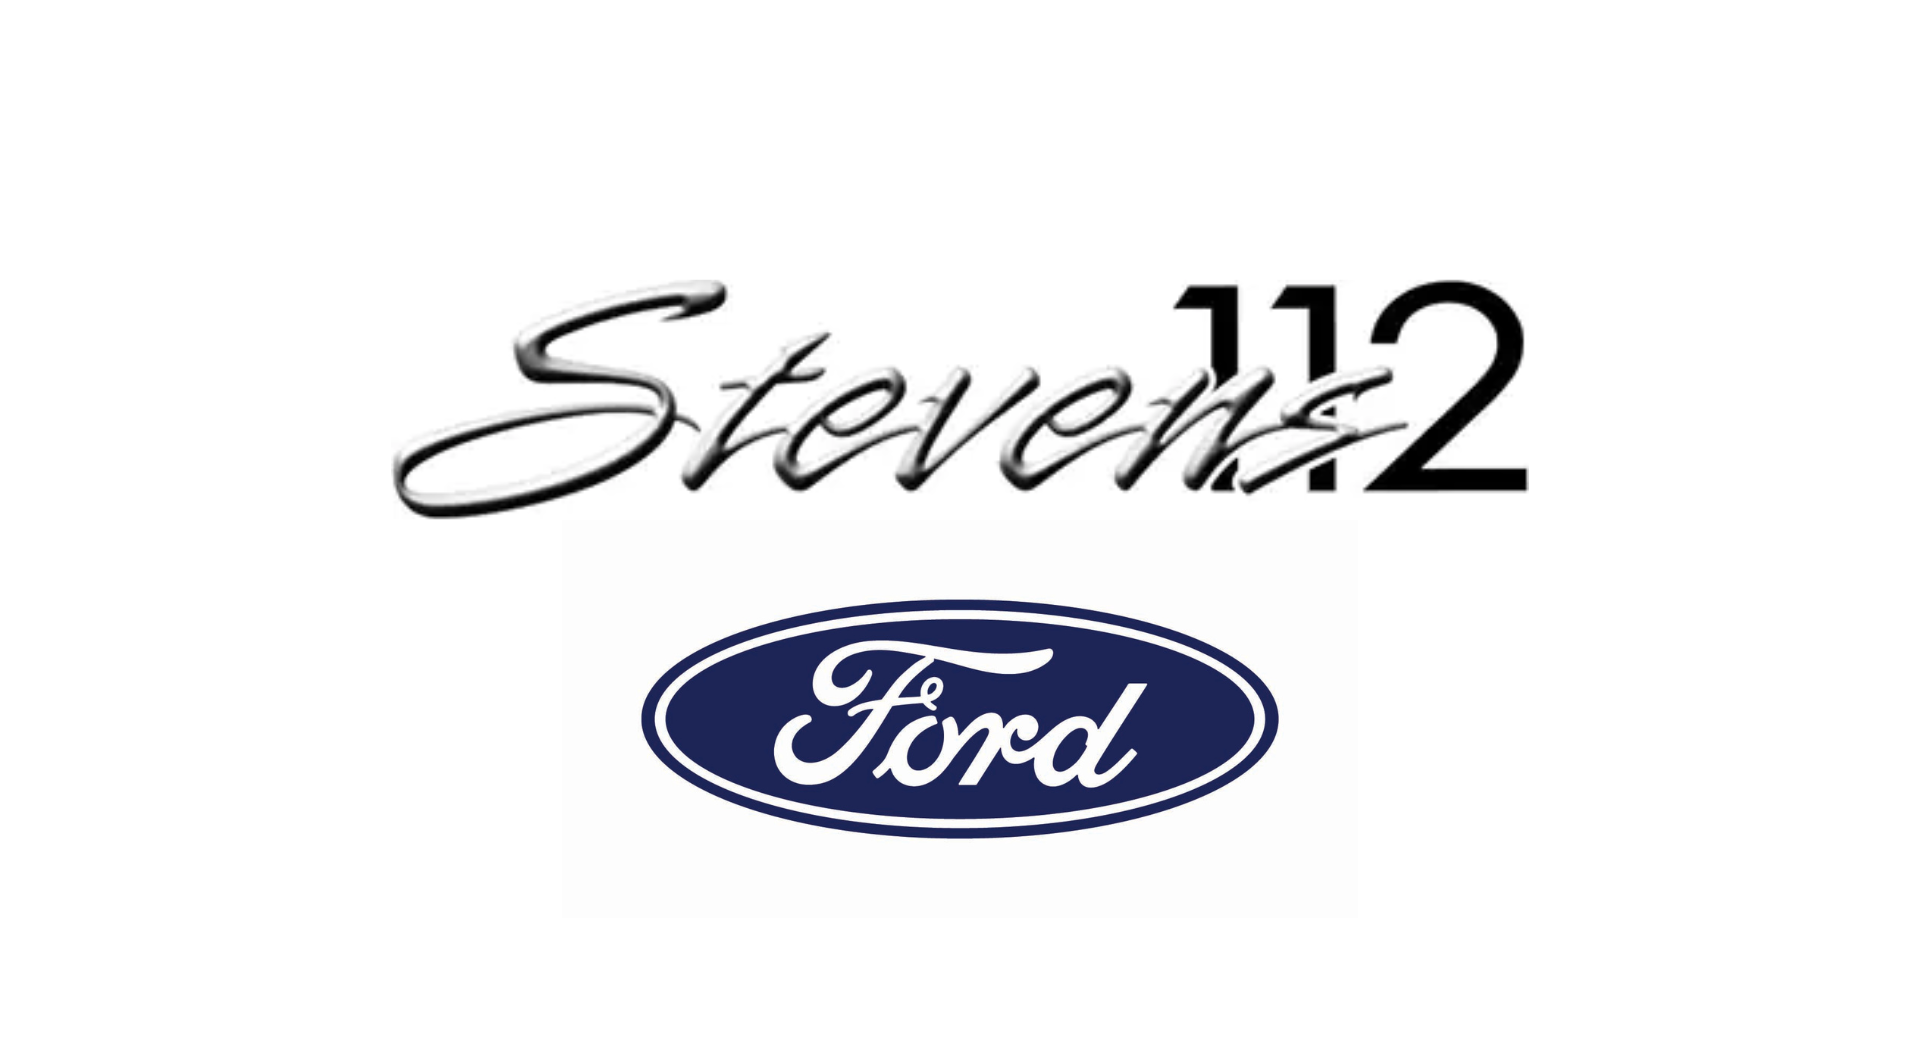 Stevens 112 Ford a Certified Agriculture Dealership